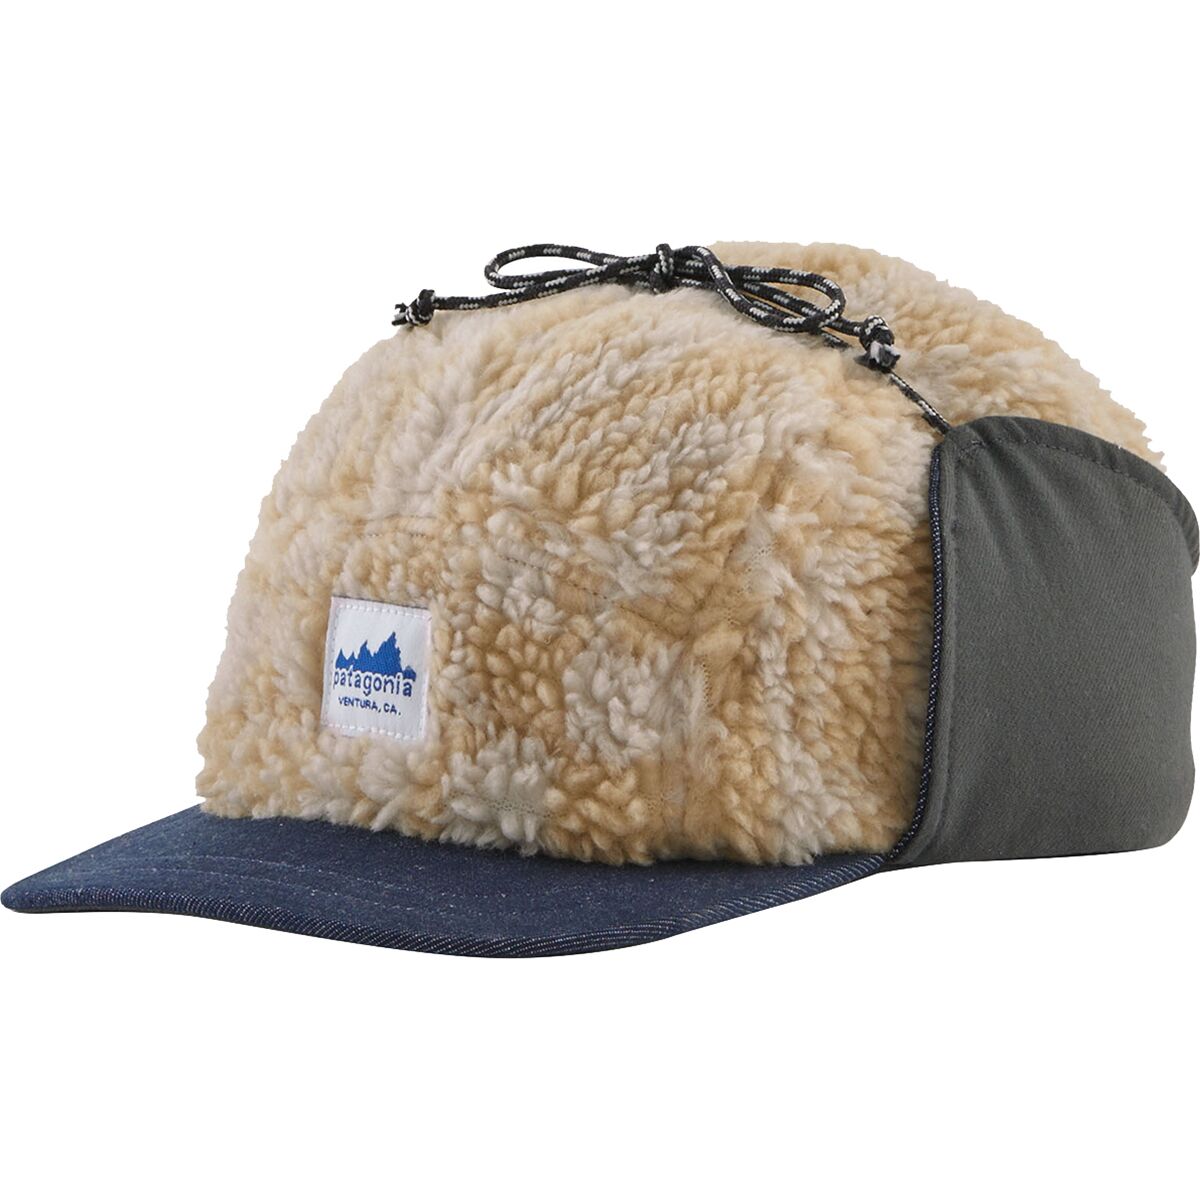 Ventura Hat  Outdoor hats, Sweatband, Mens caps